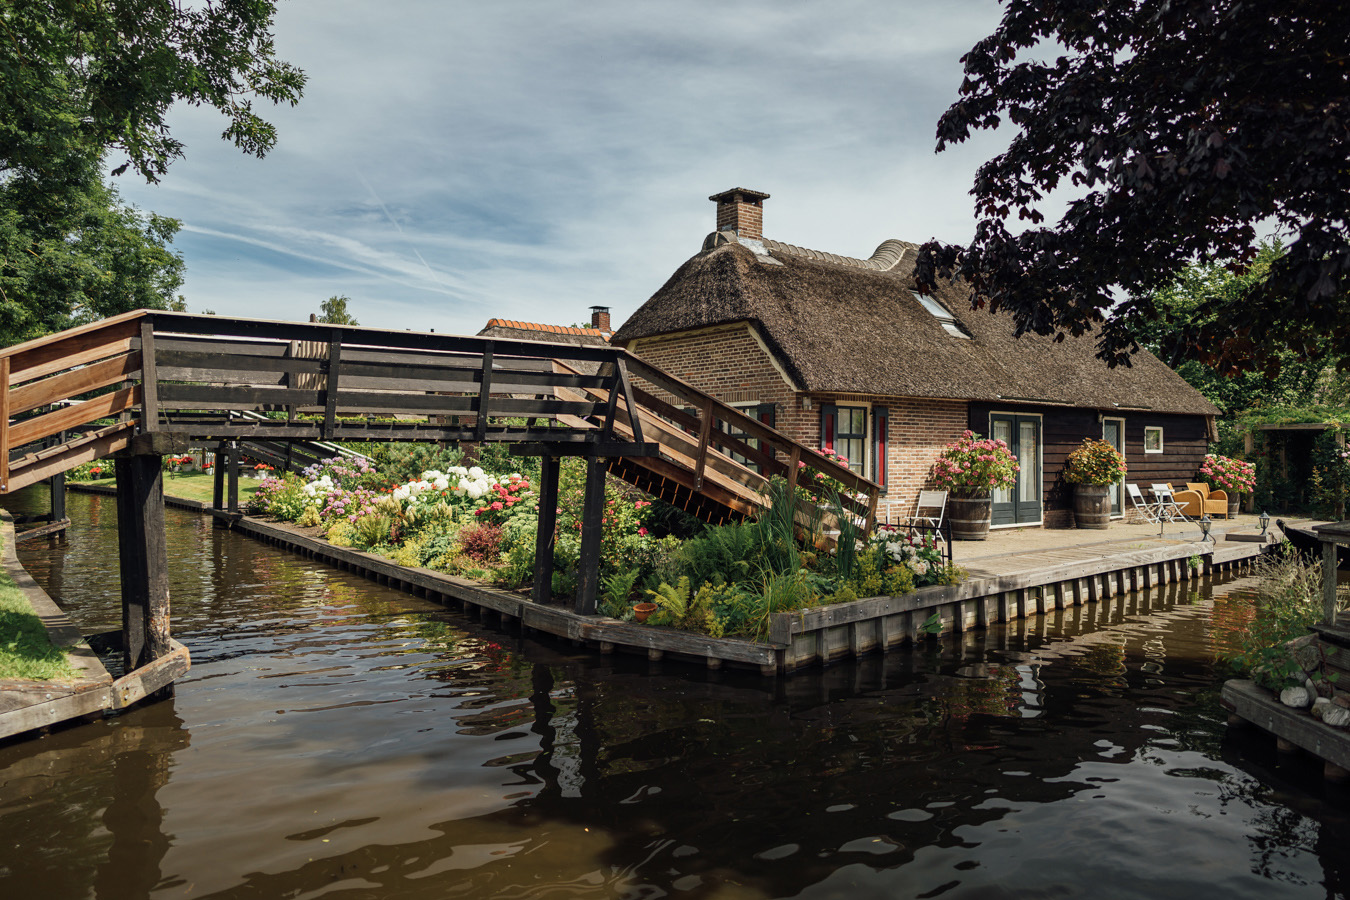 Photograph of Giethoorn, Netherlands by Alex Nichol